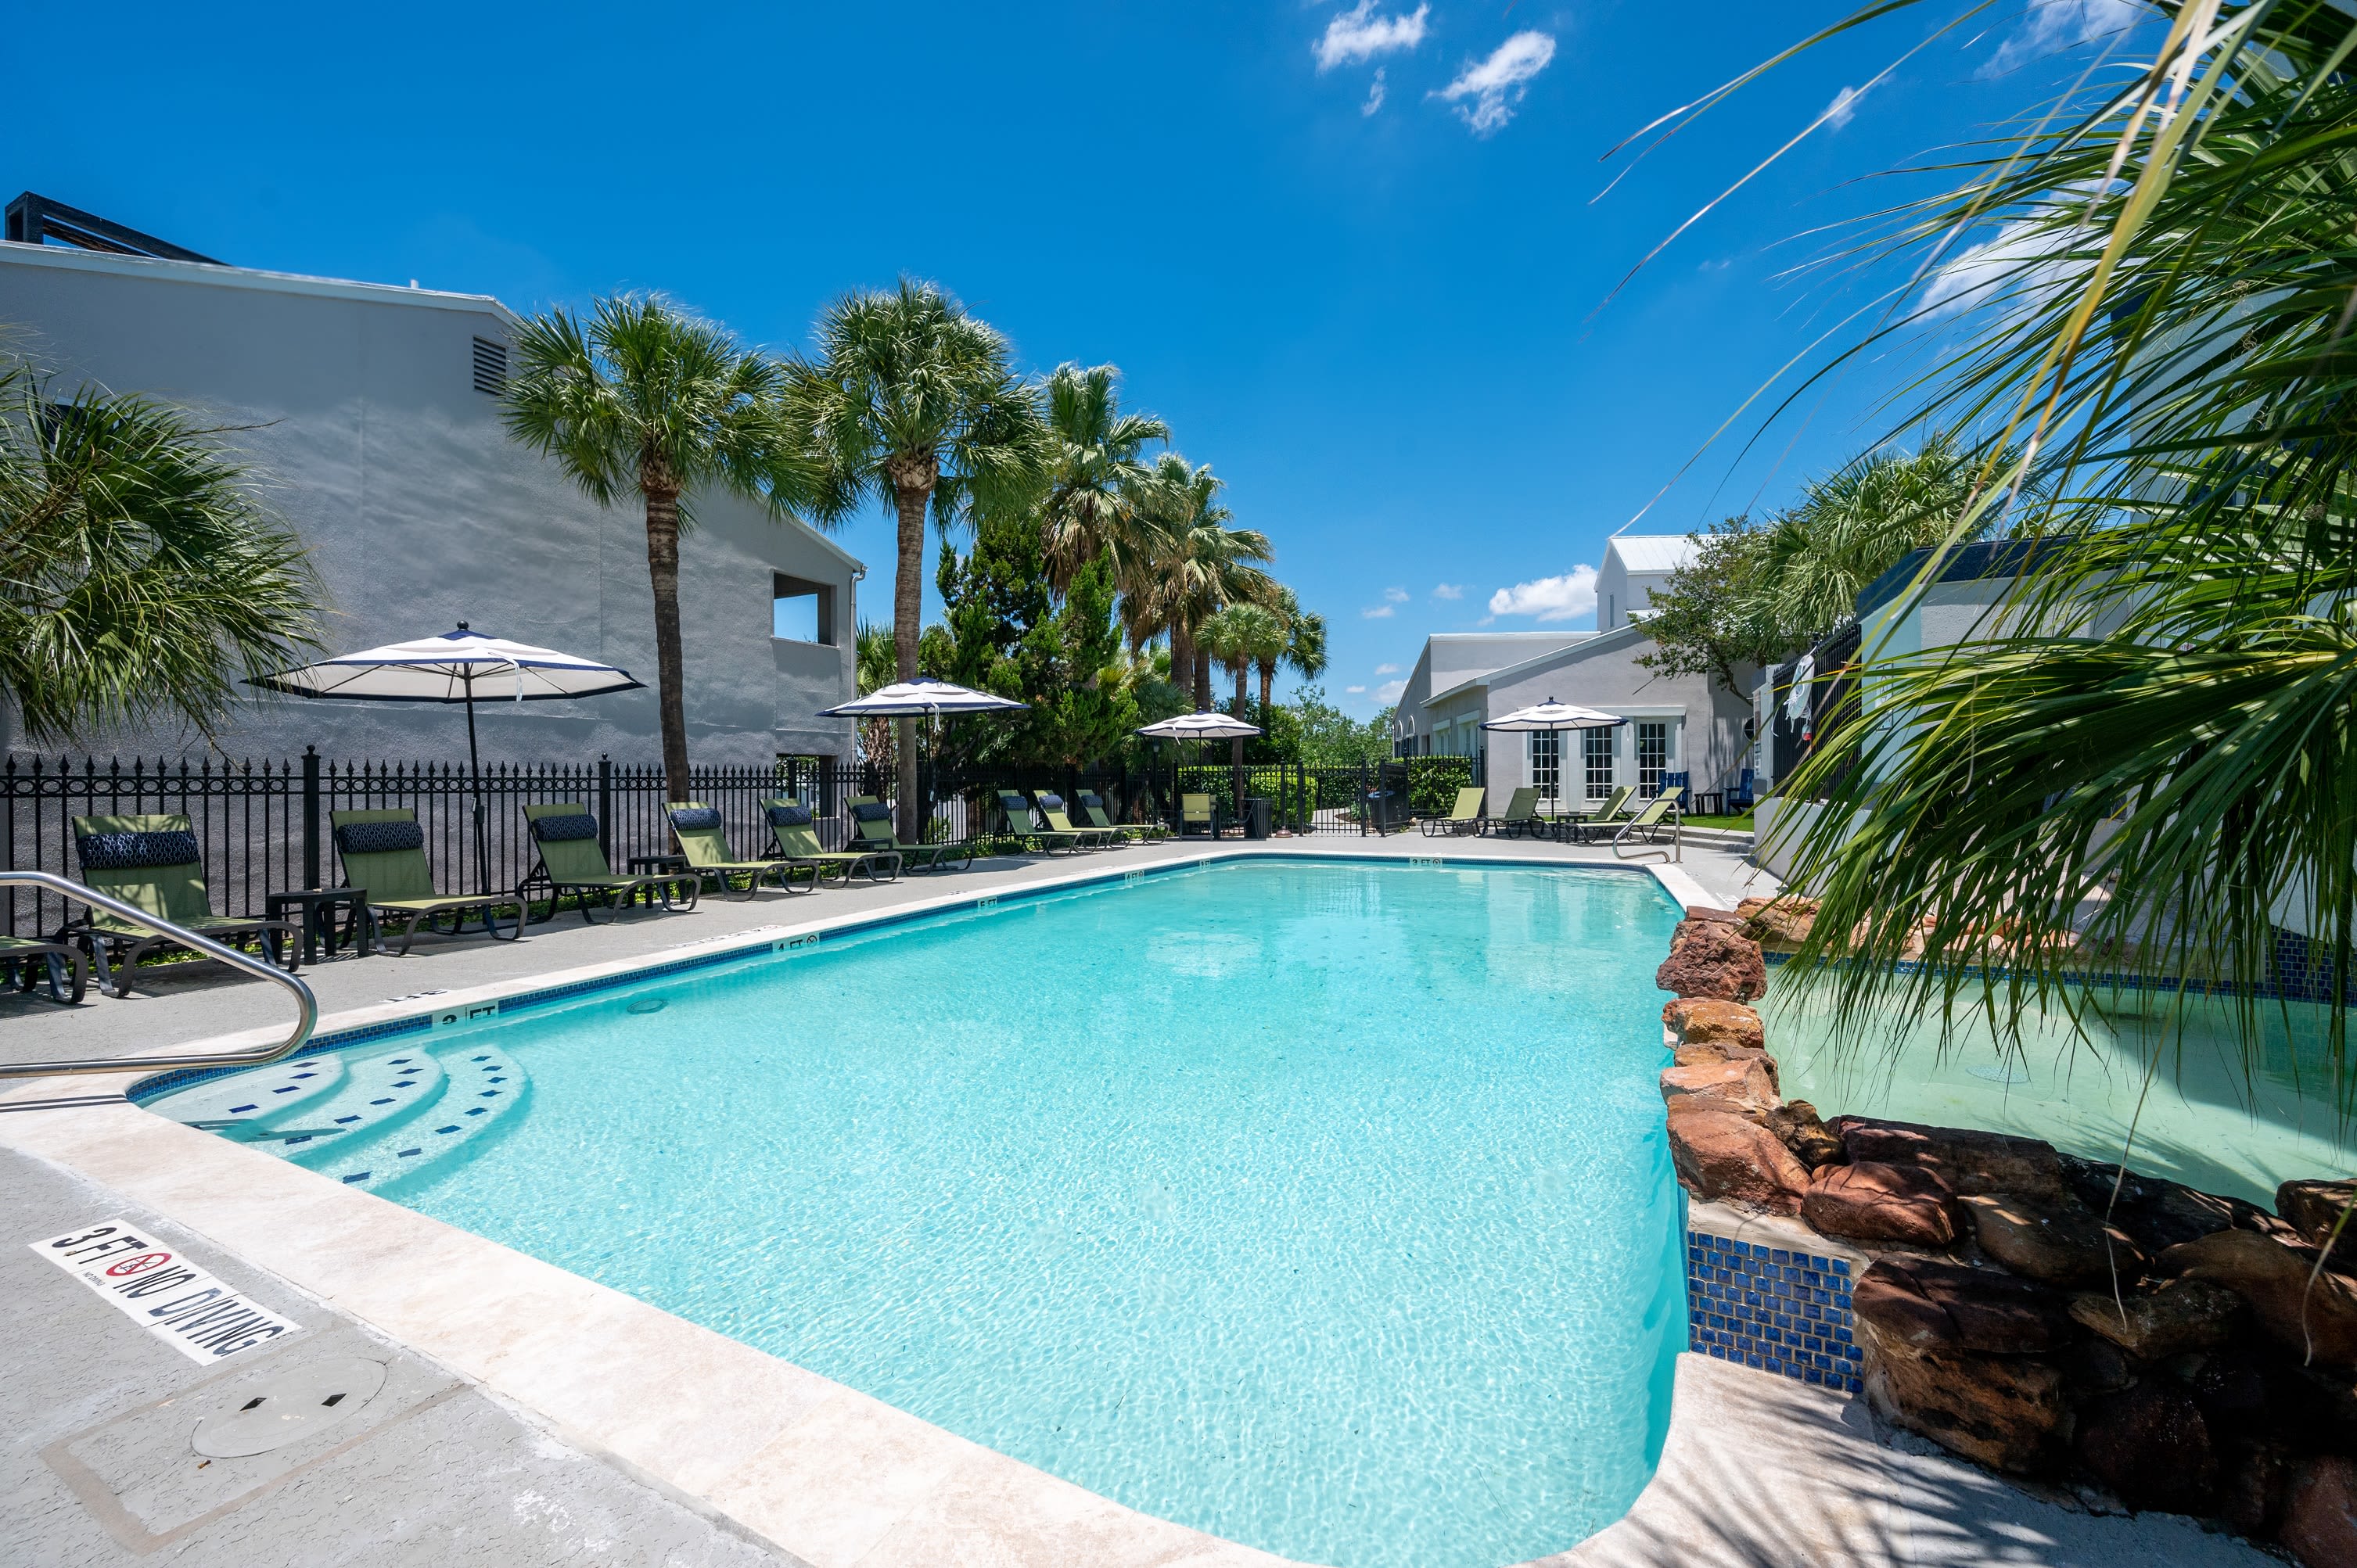 Resort style pool at Royal Palms in San Antonio, Texas